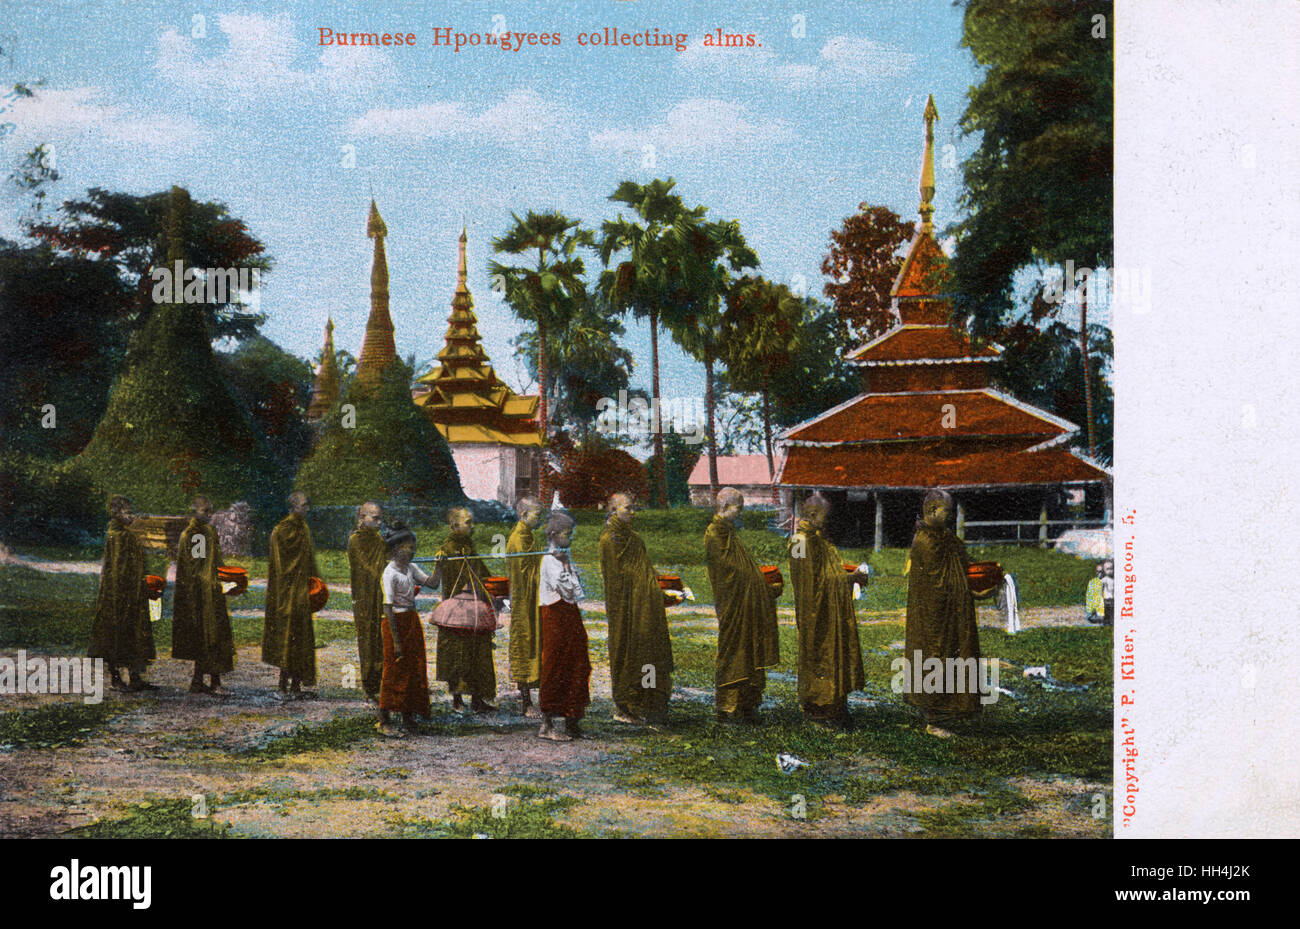 Monjes birmanos (hpongies) recogiendo limosnas, Birmania Foto de stock